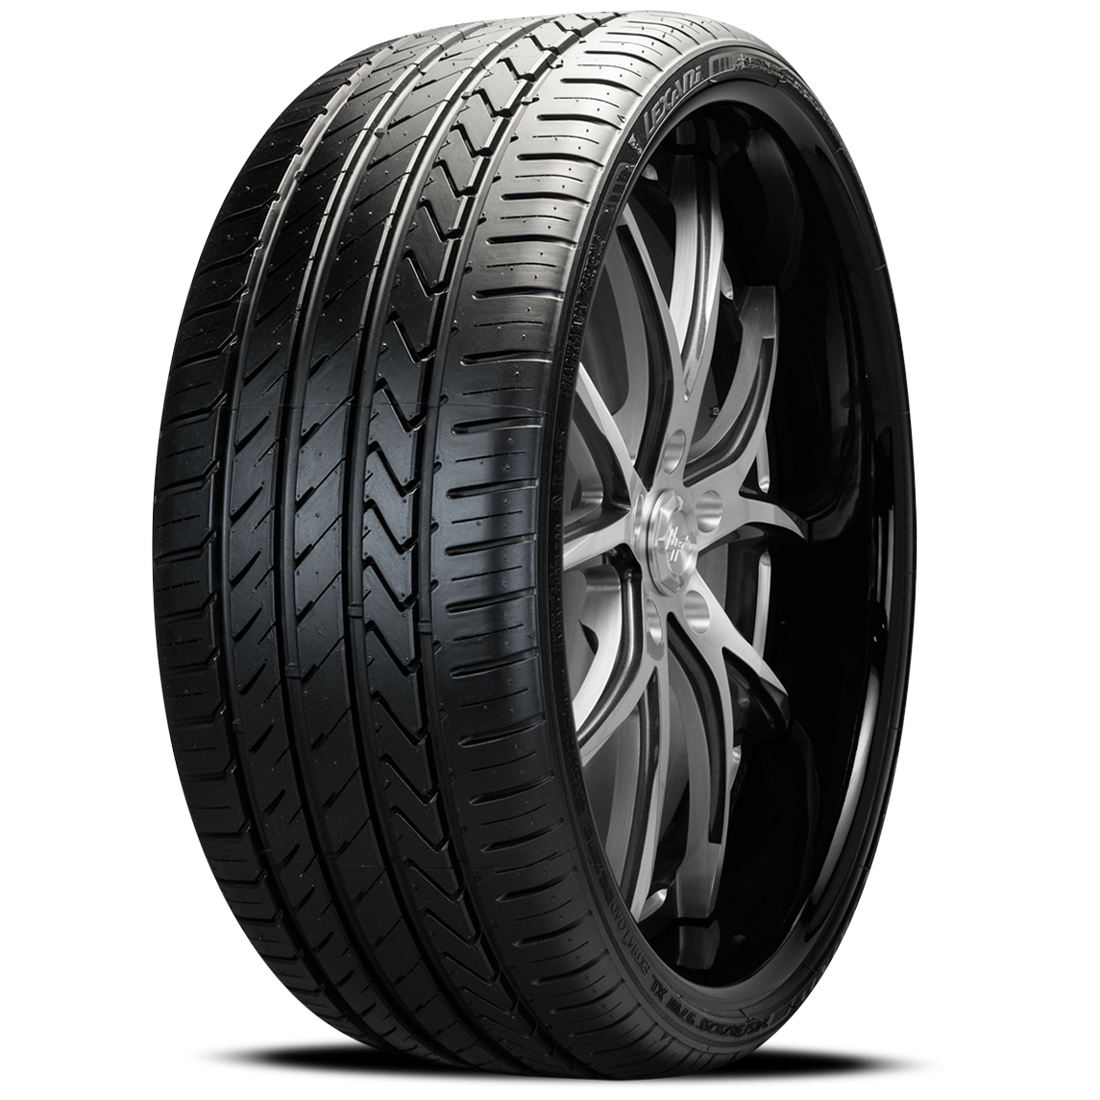 LEXANI LX-TWENTY 275/35ZR19 (26.6X10.9R 19) Tires